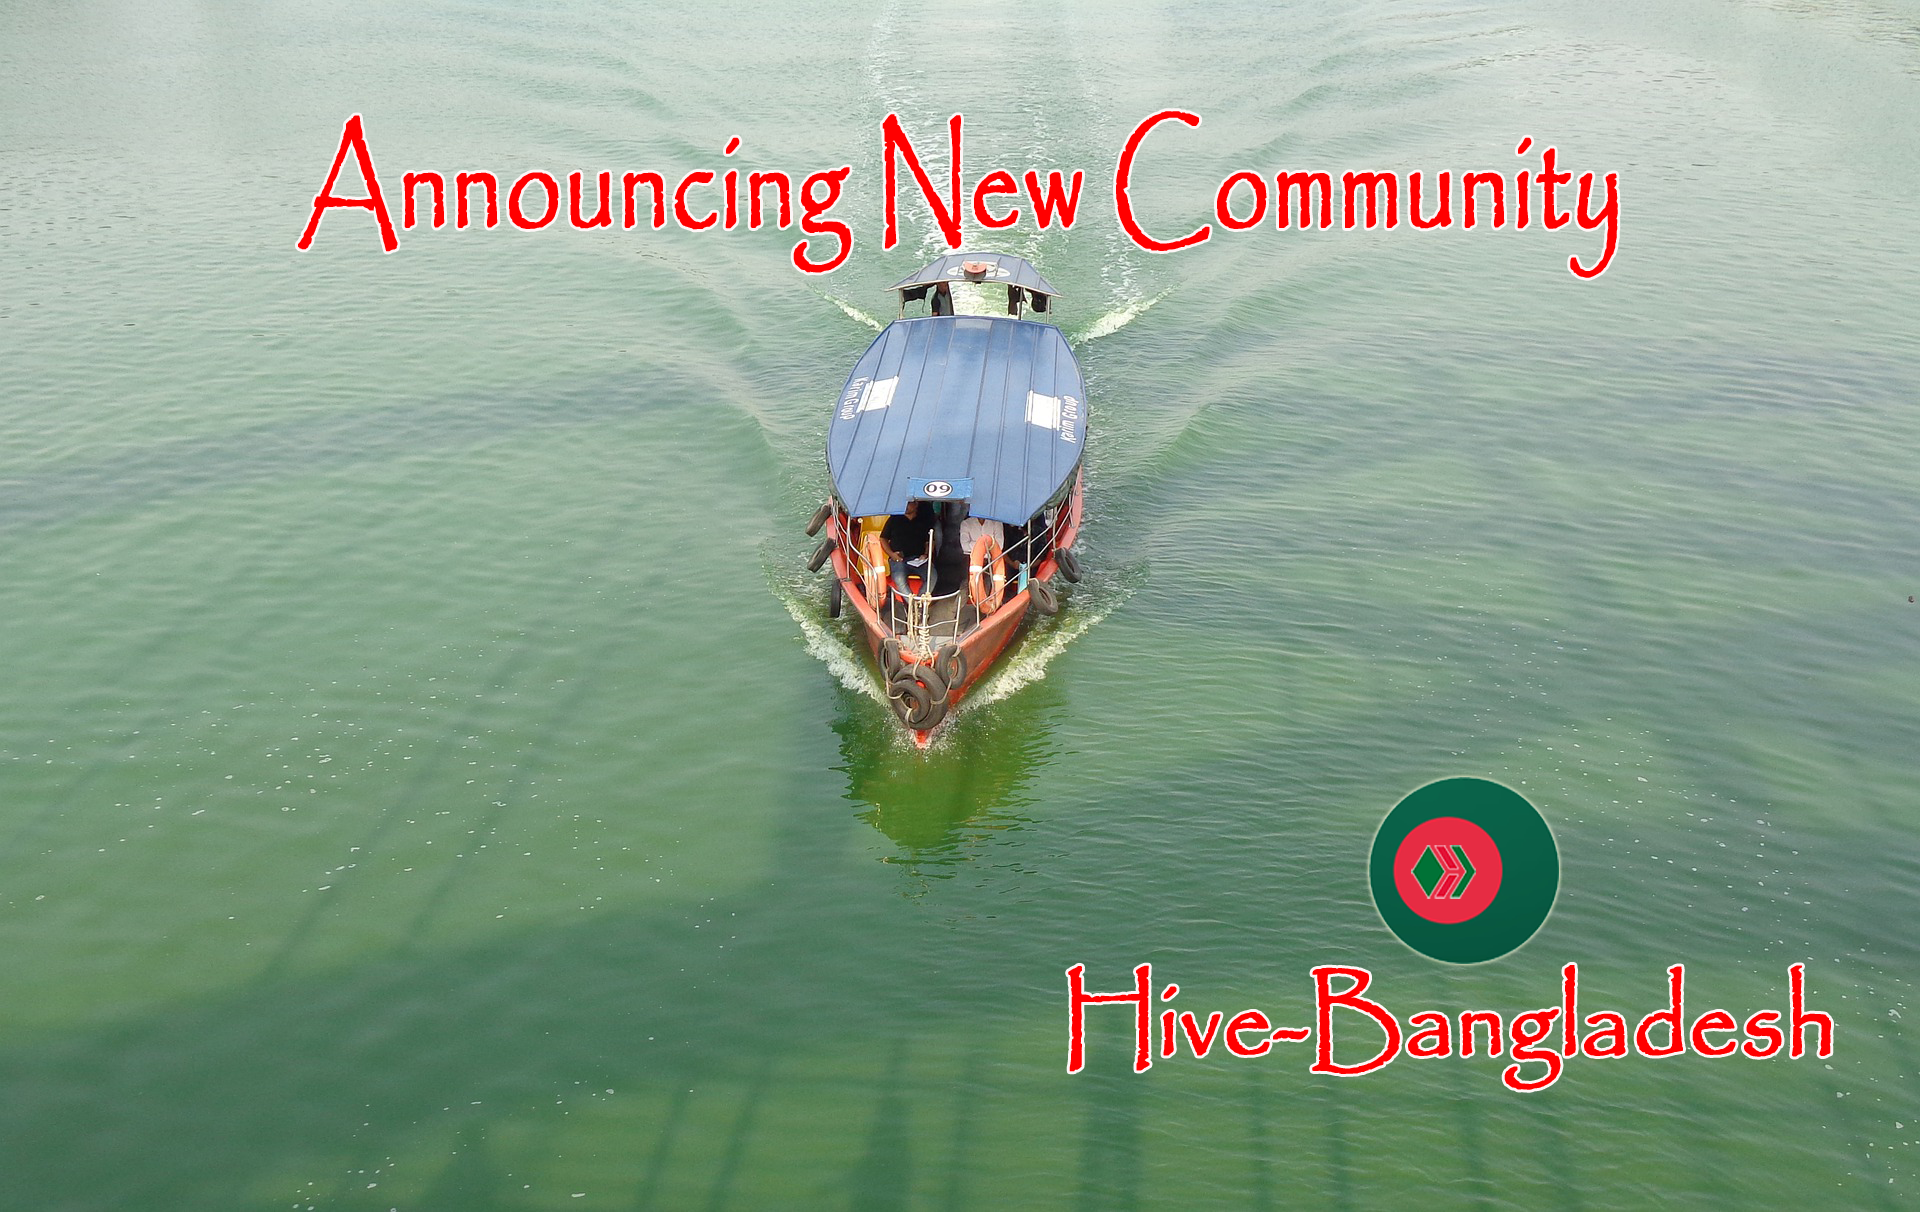 Announcing New Community Hive-Bangladesh.png